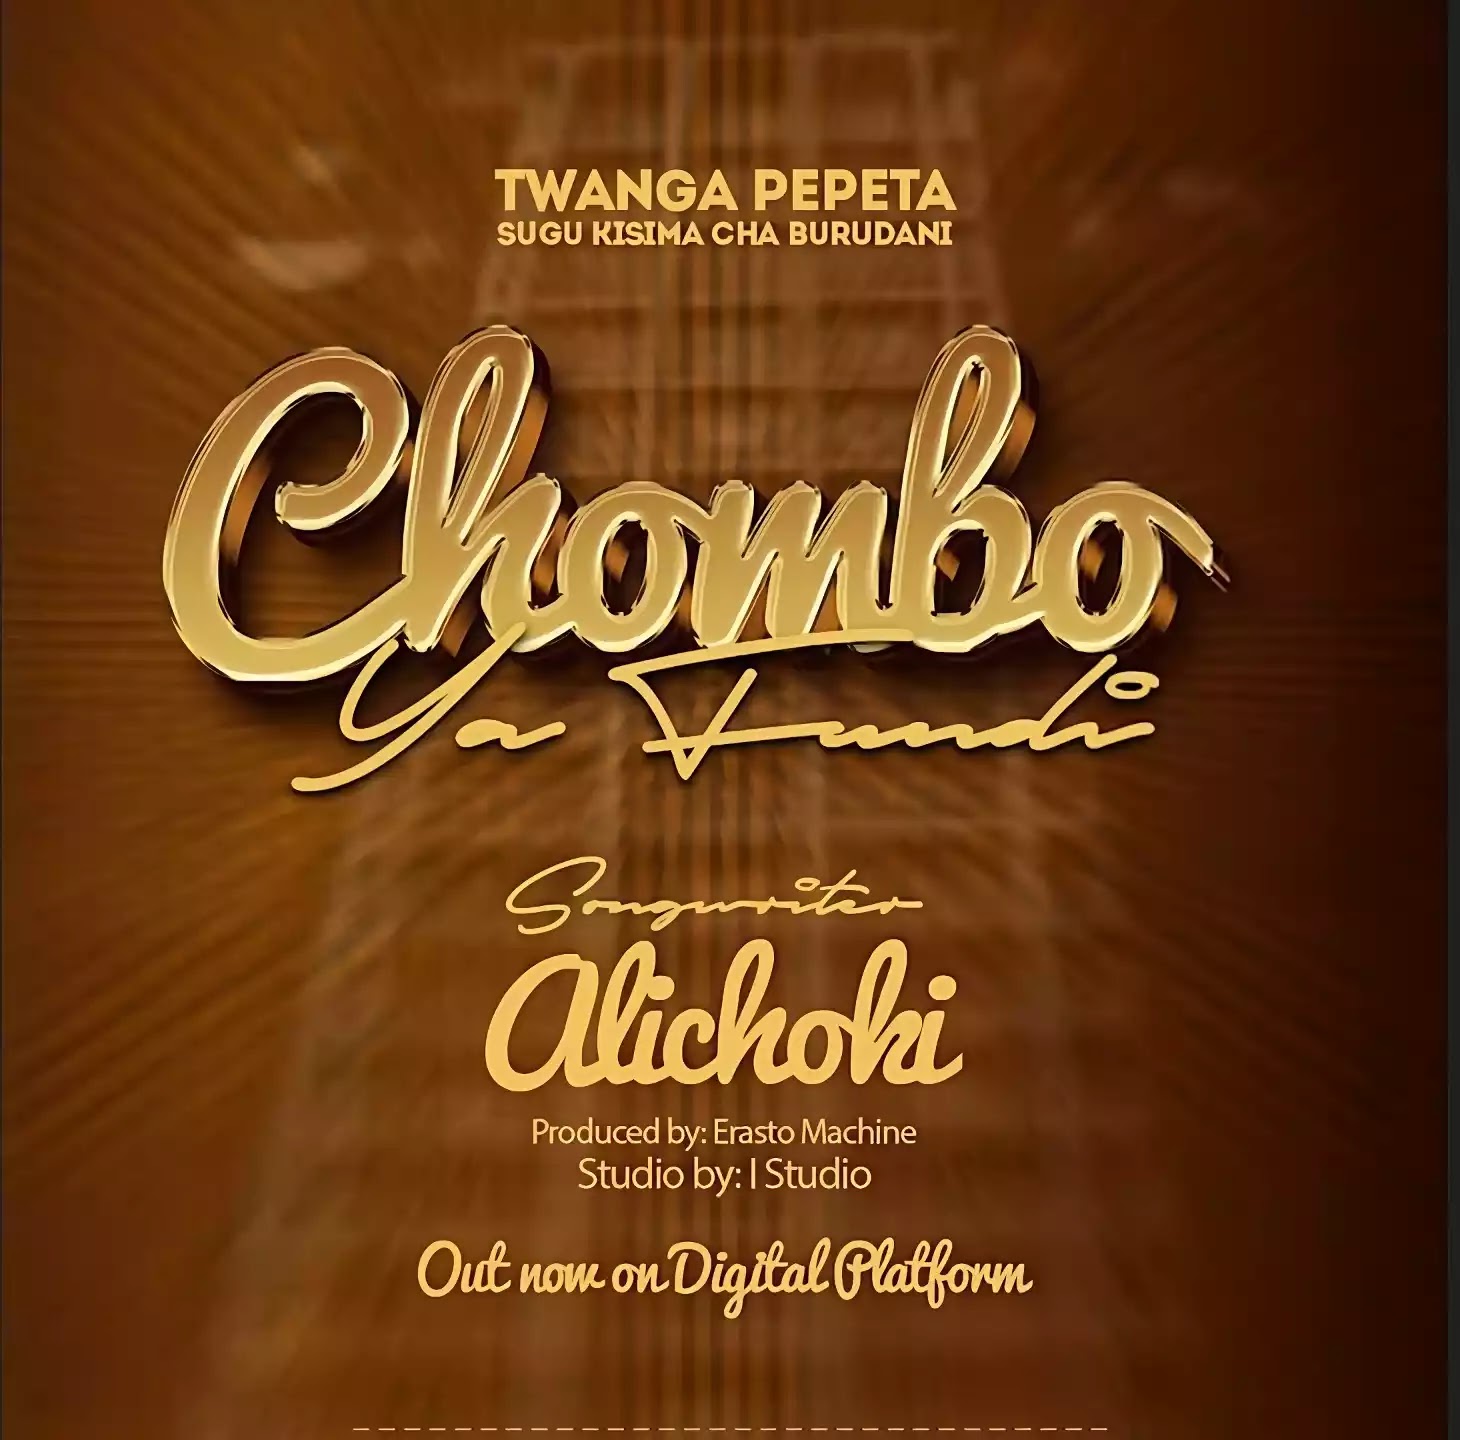 Download Audio Mp3 | Twanga Pepeta - Chombo ya Fundi